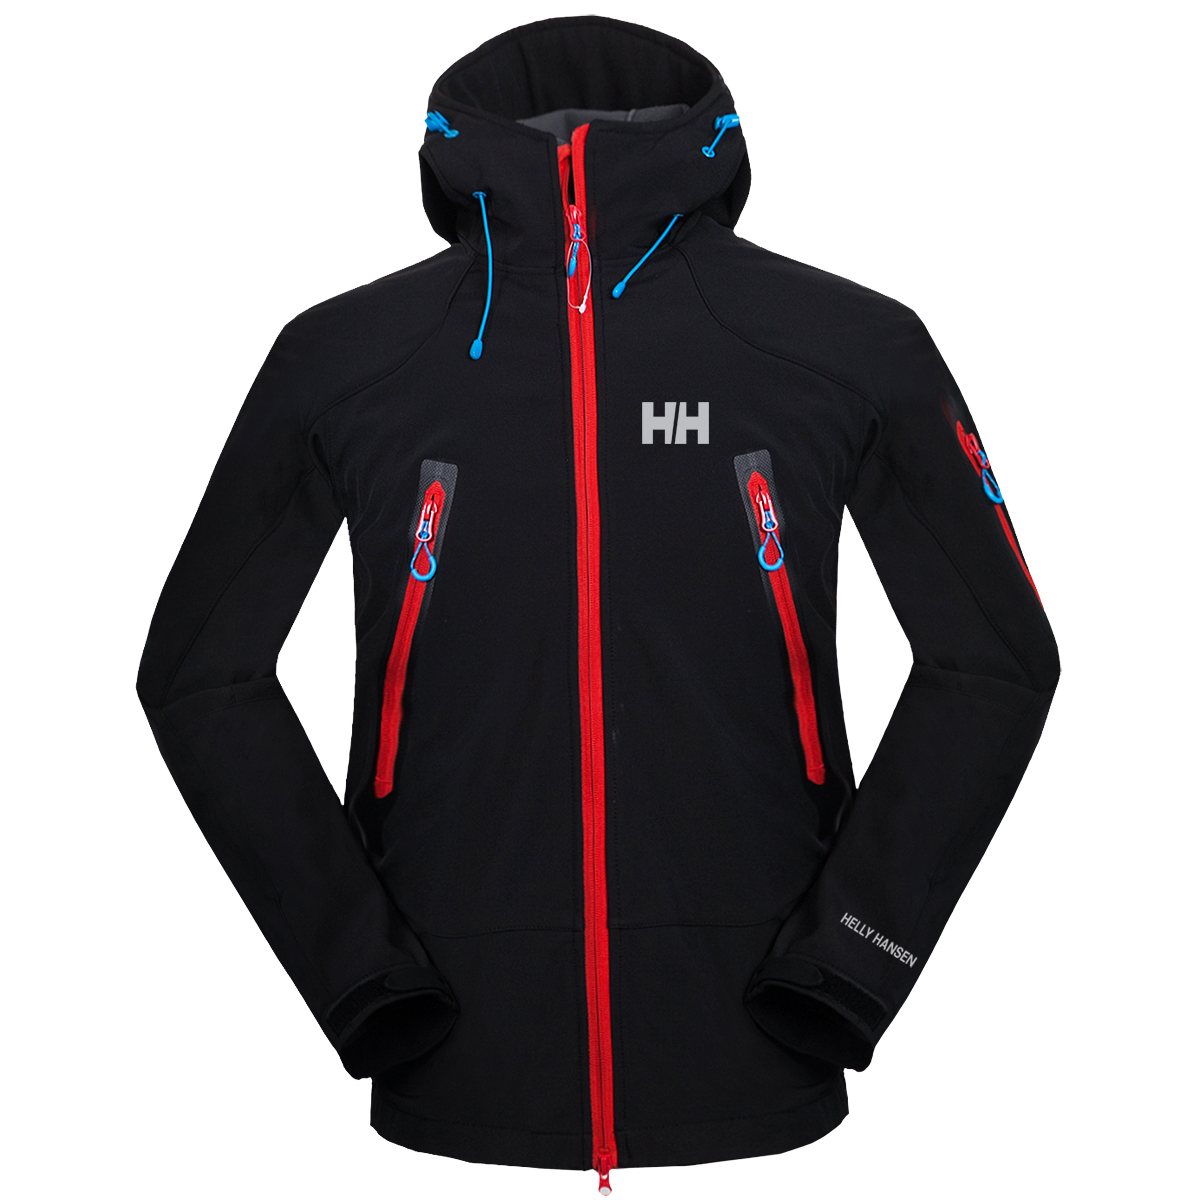 

2019 new The North mens Jackets Hoodies Fashion Casual Warm Windproof Ski Face Coats Outdoors Denali Fleece Jackets Suits S-XXL 06, Orange